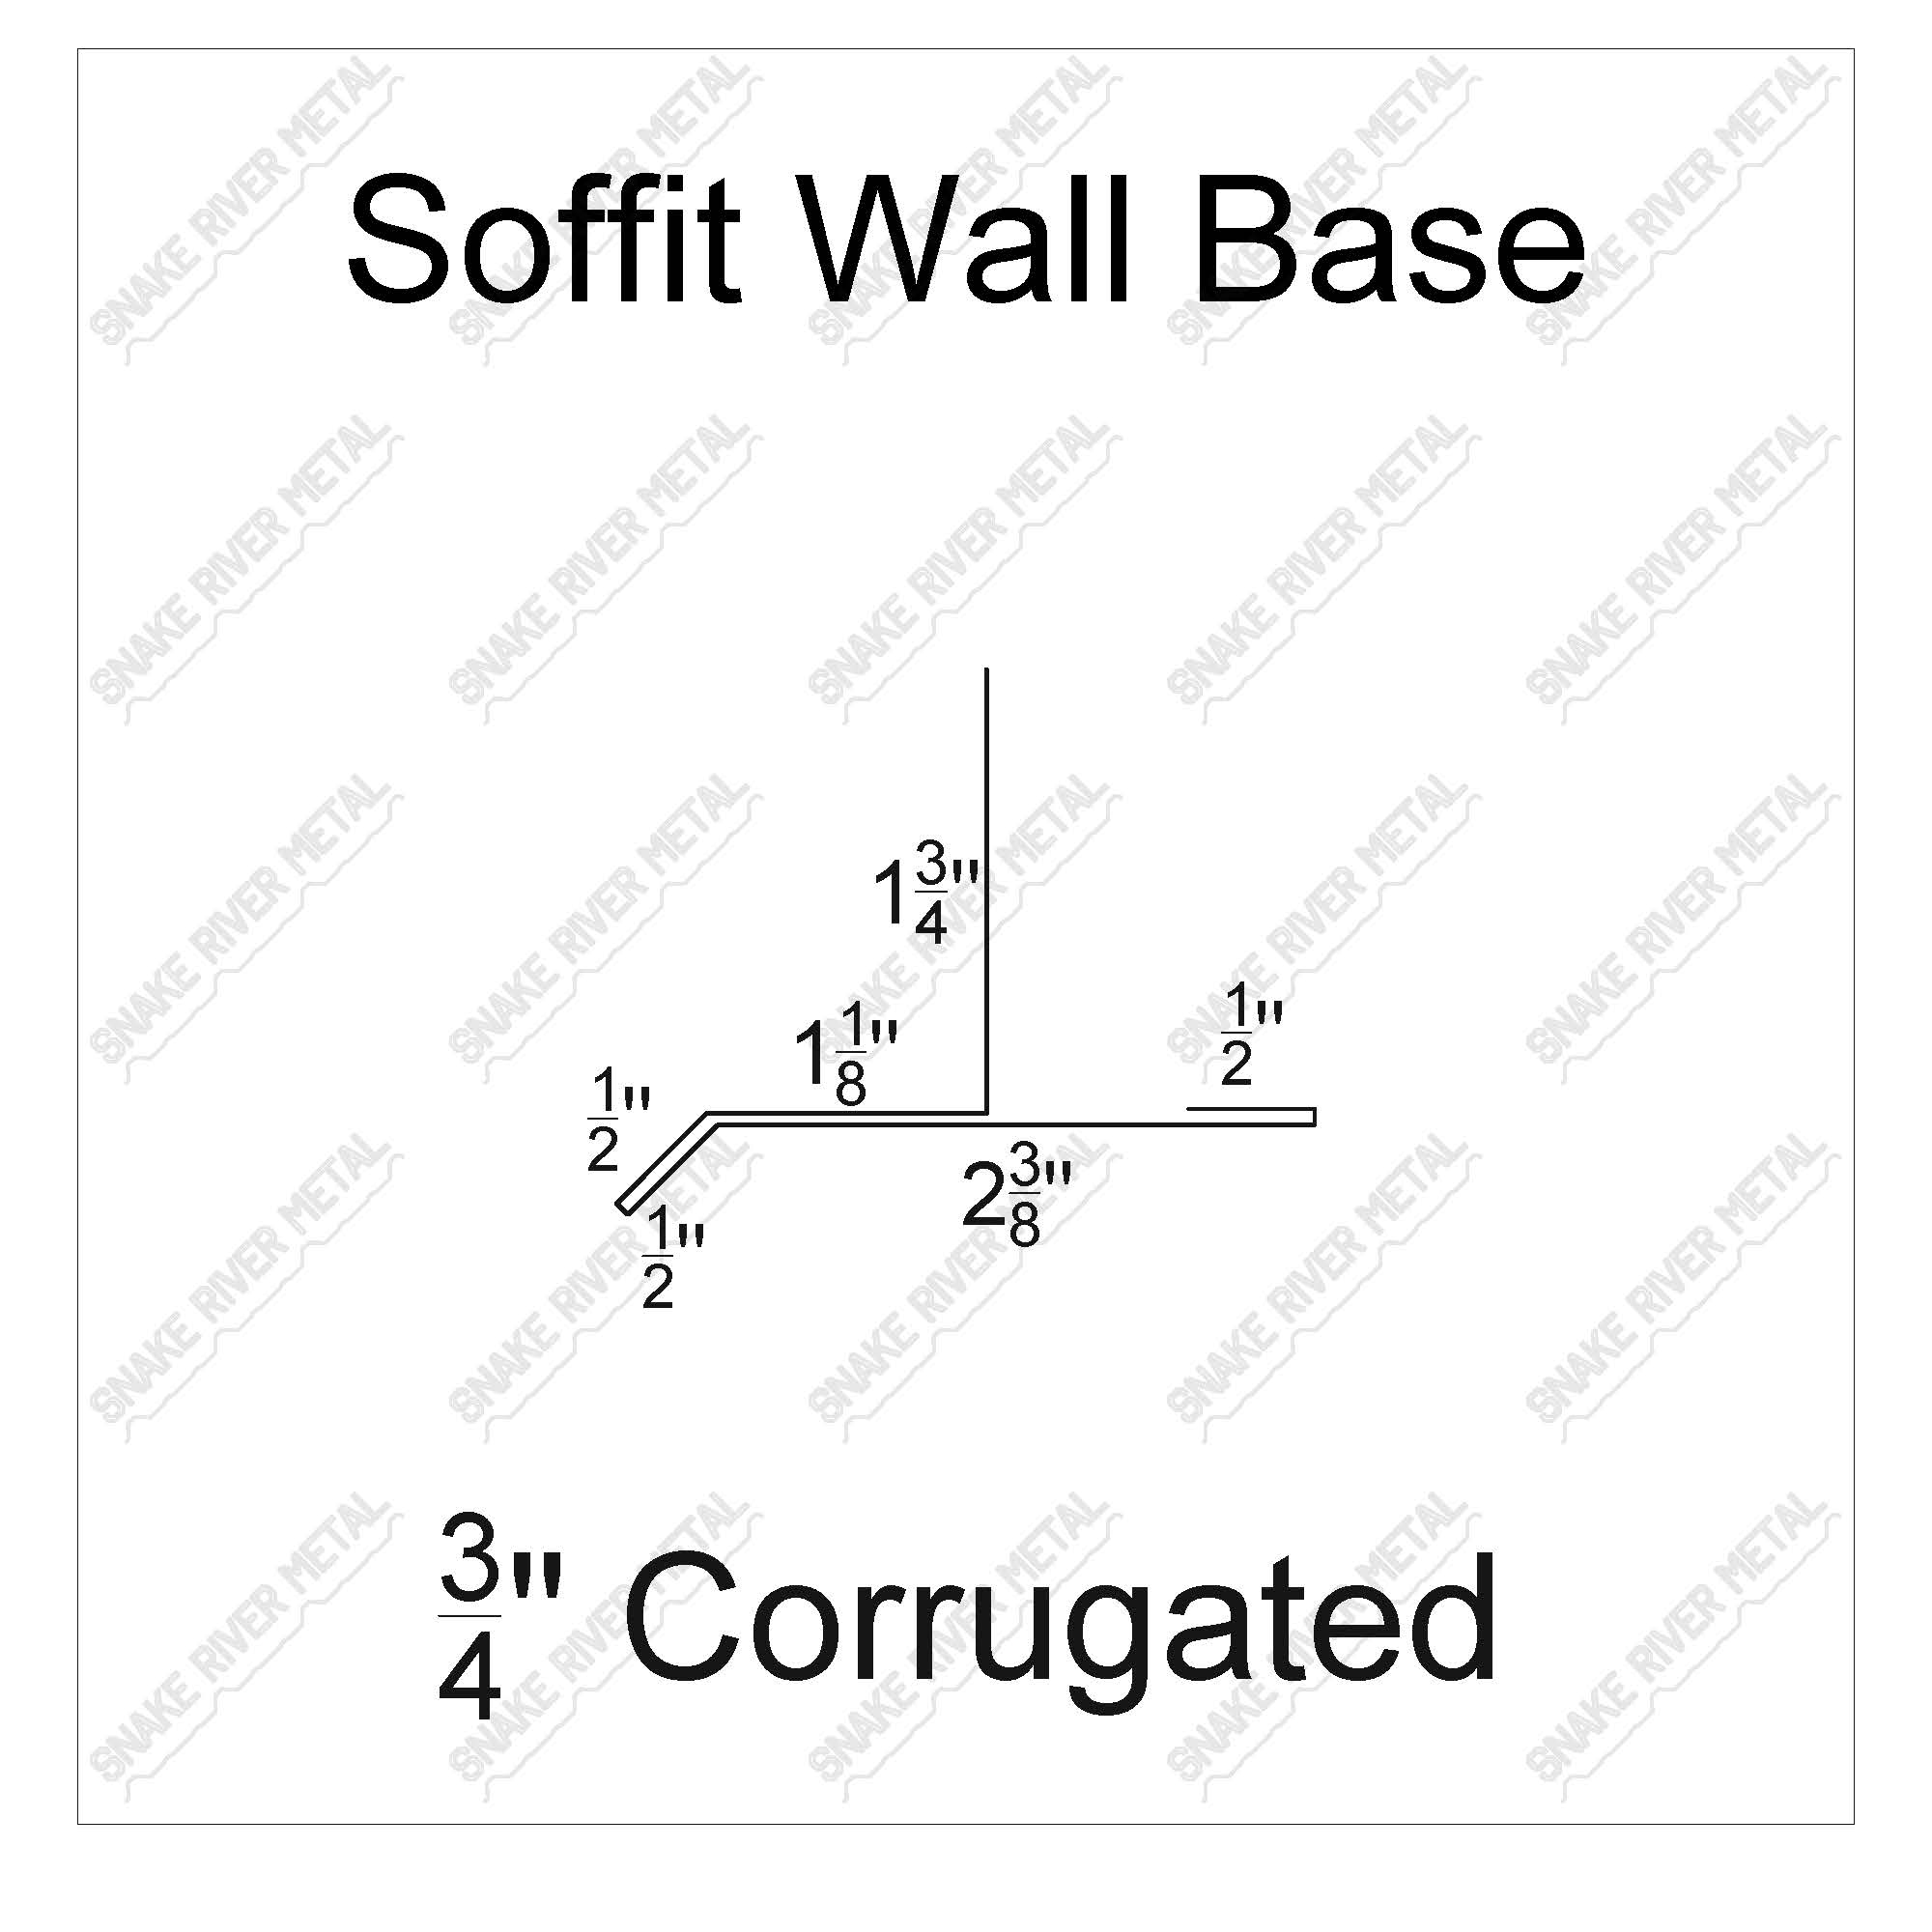 Soffit Wall Base - Corrugated Trim